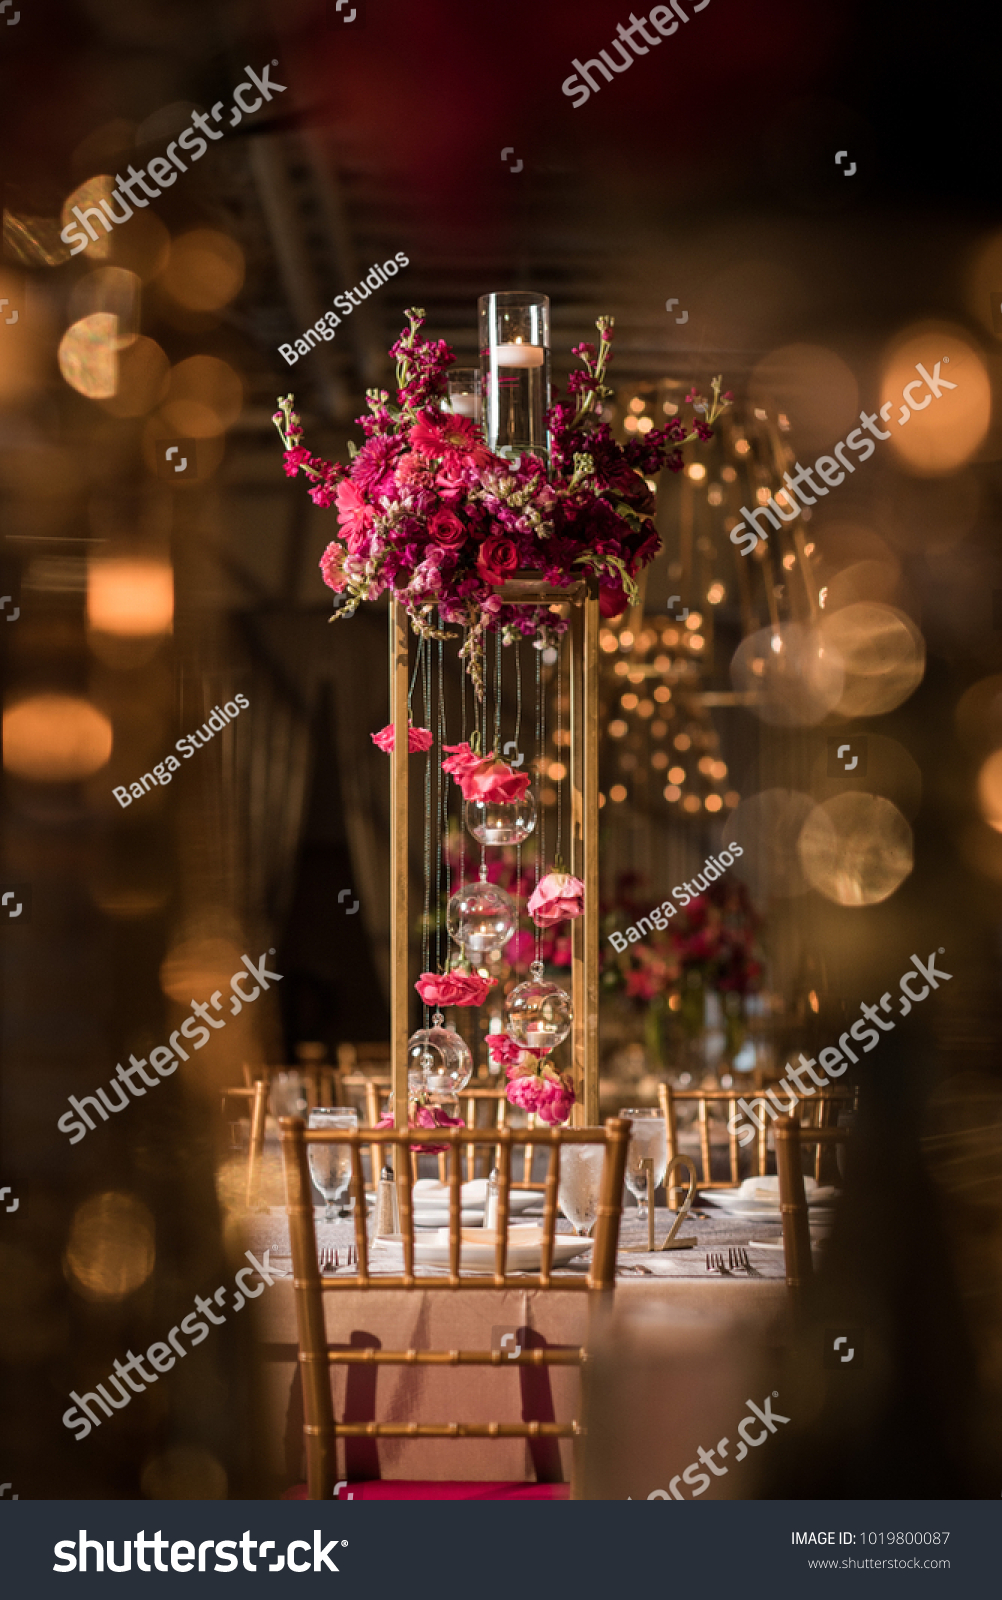 unique wedding decor